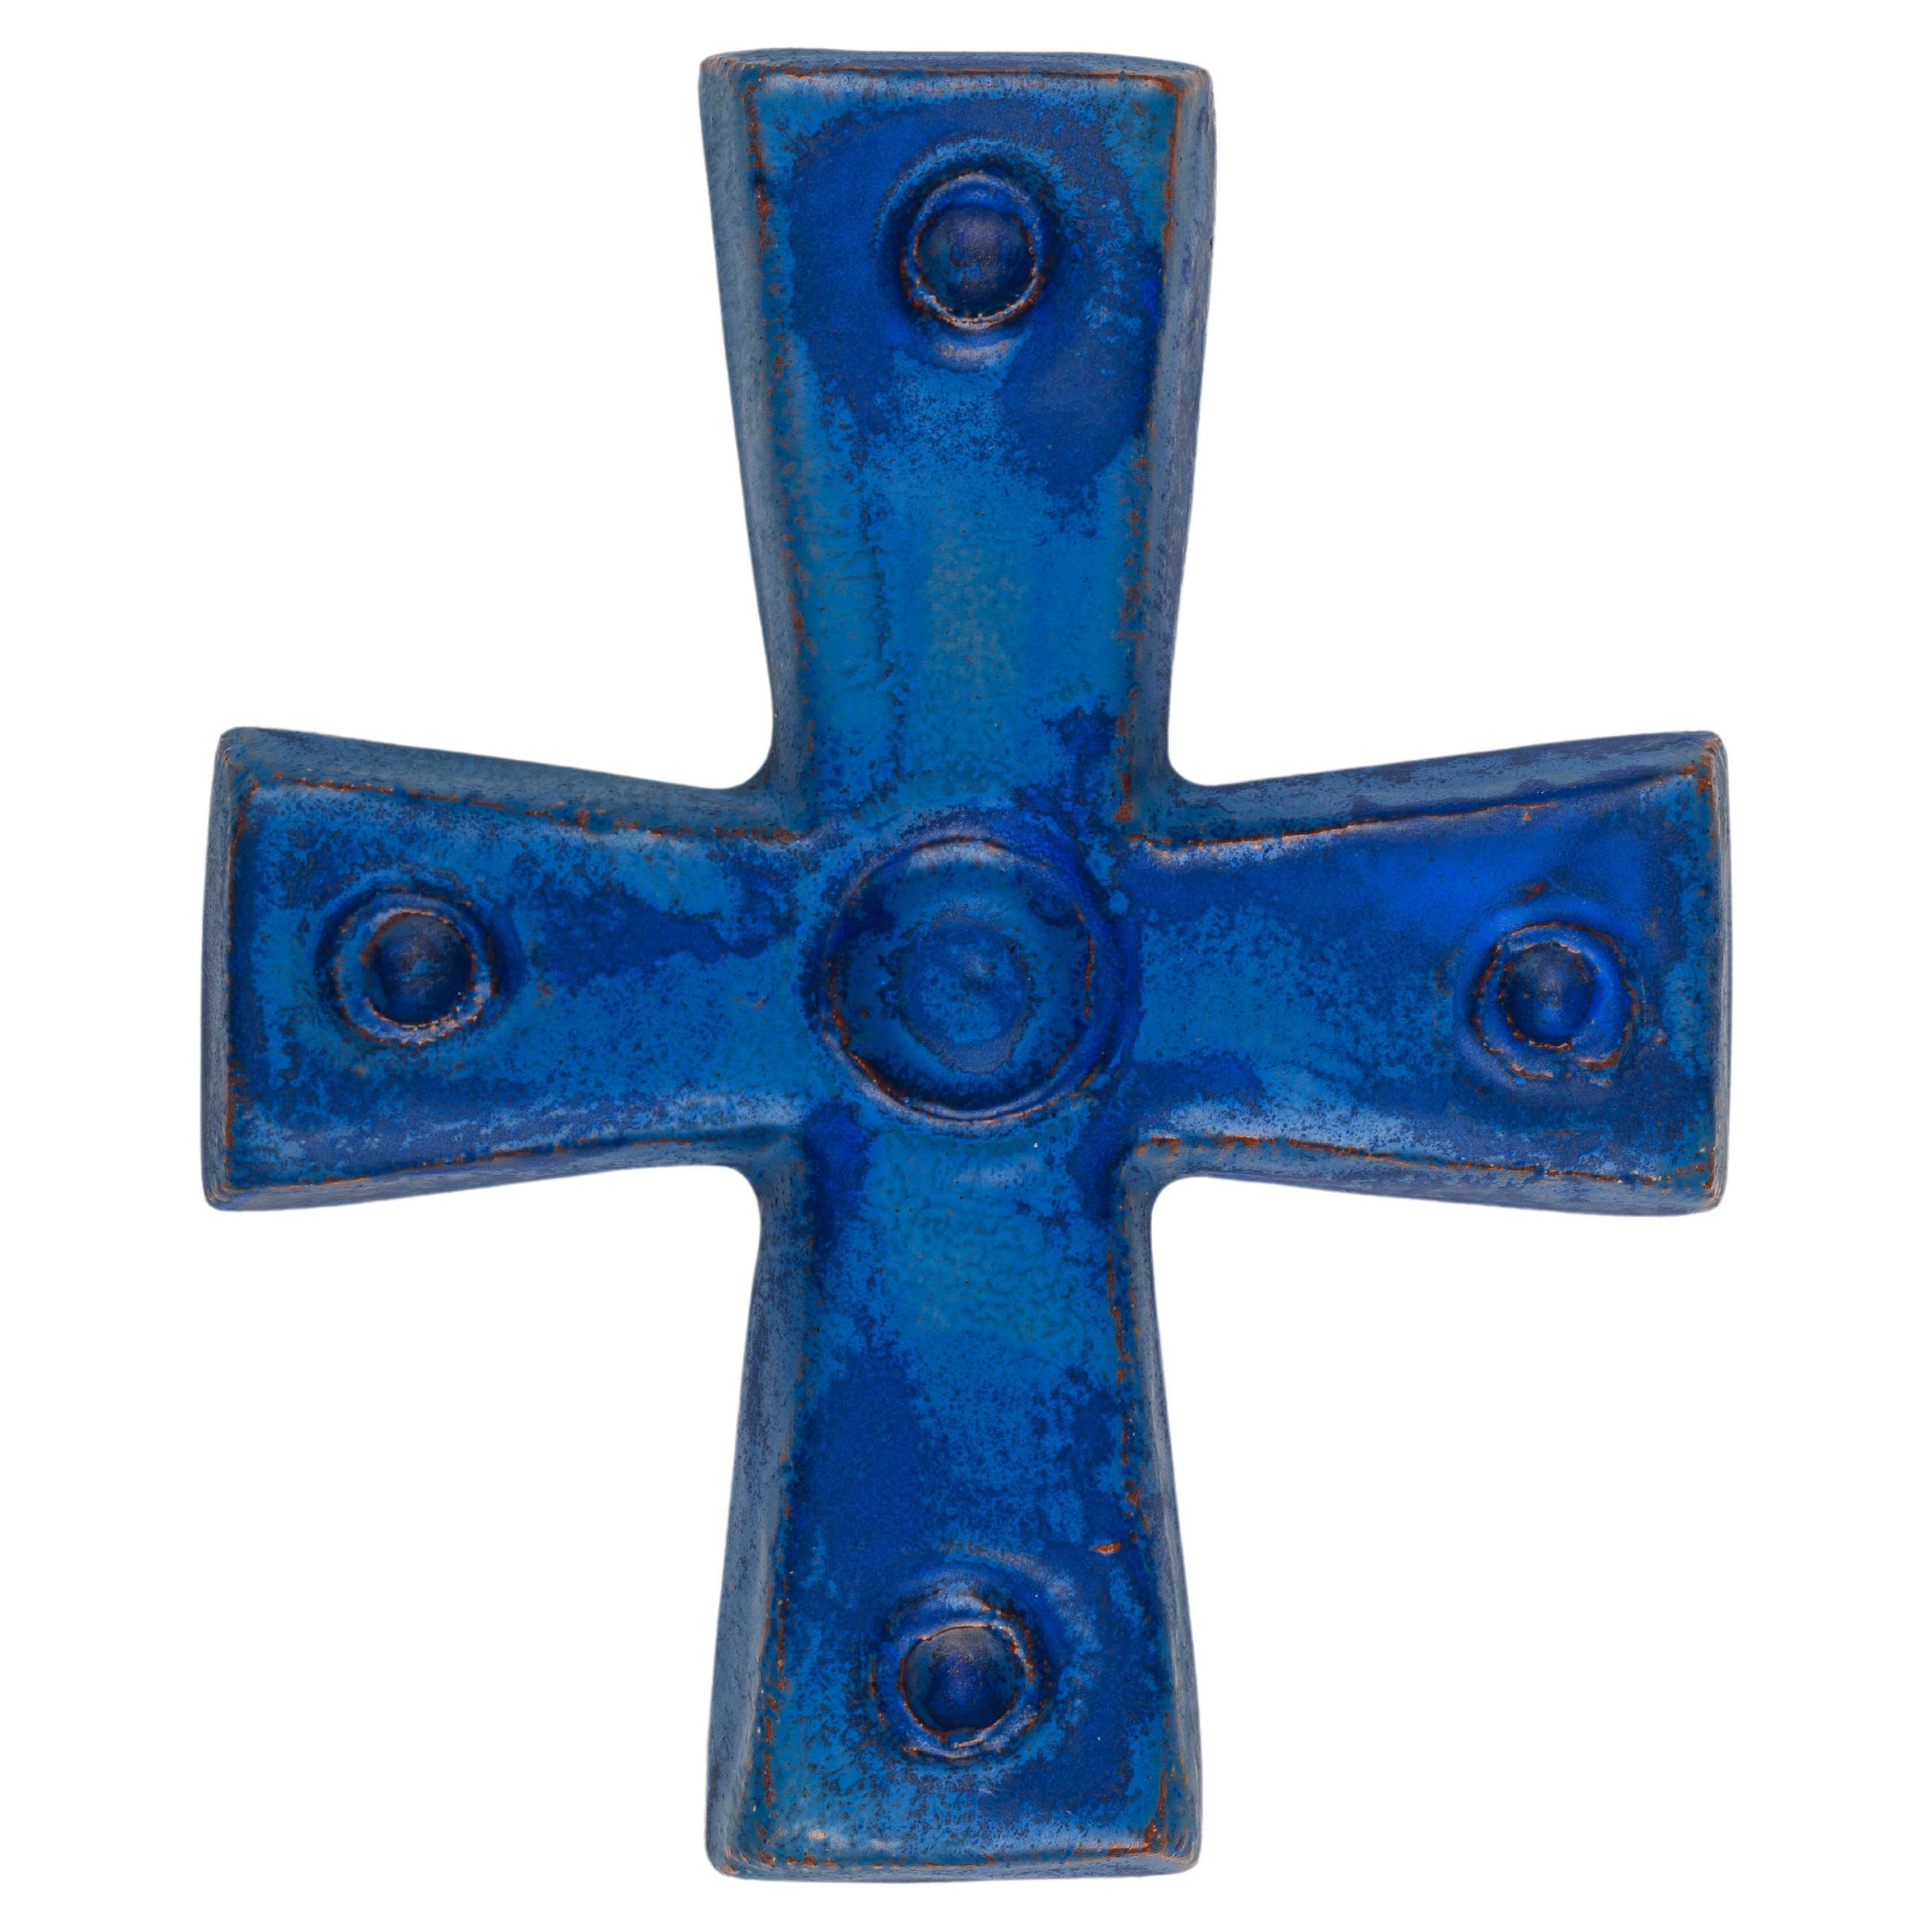 Blue Ceramic Cross with Circular Embellishments, Unique Religious Collectible